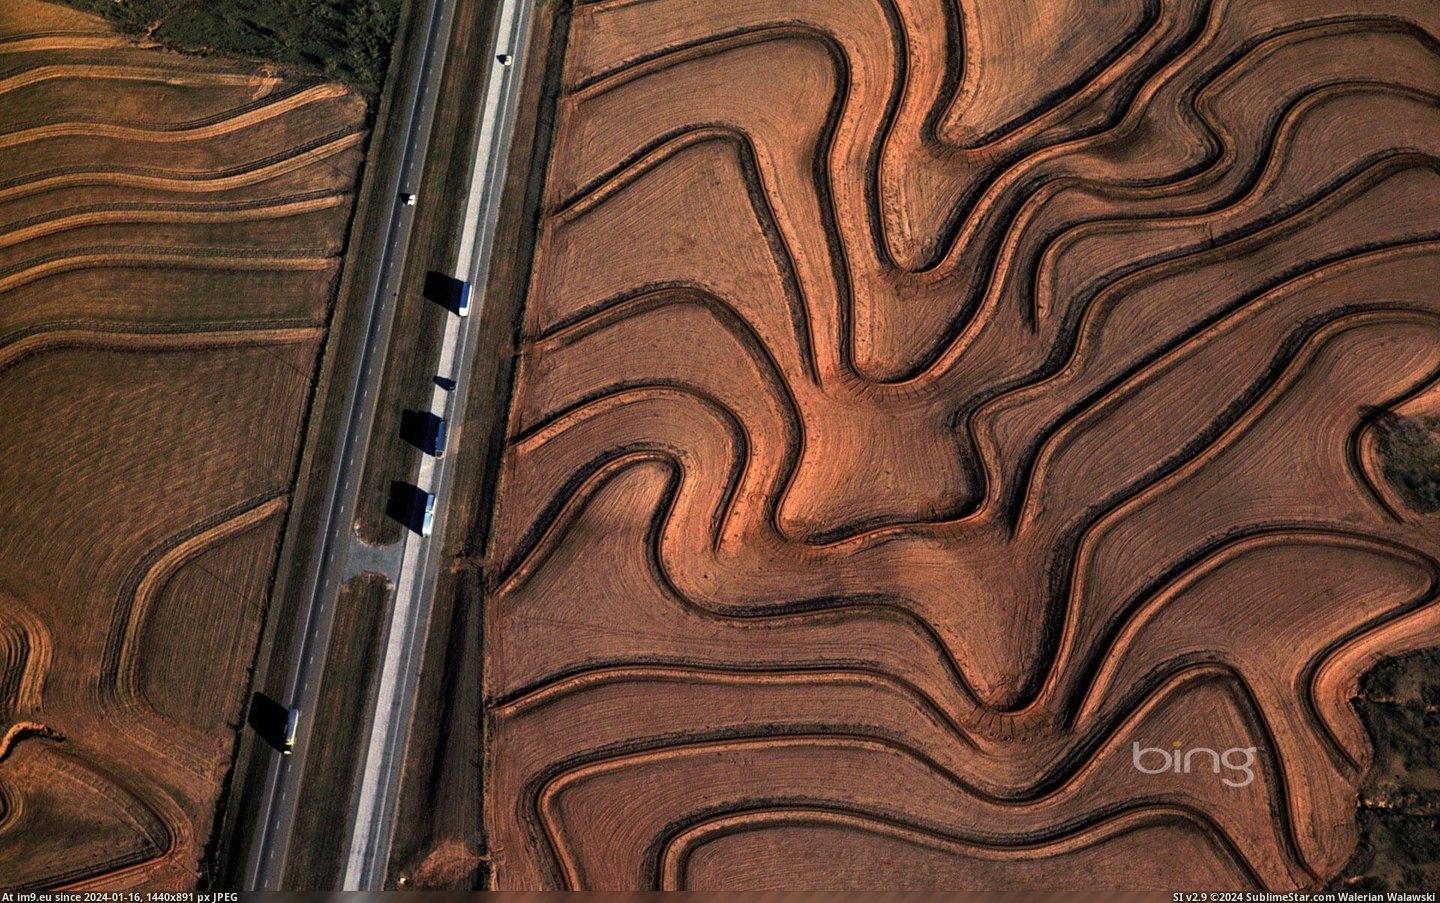 Highway 287 cuts through curving plowed fields near Carey, Texas (in Bing Photos November 2012)